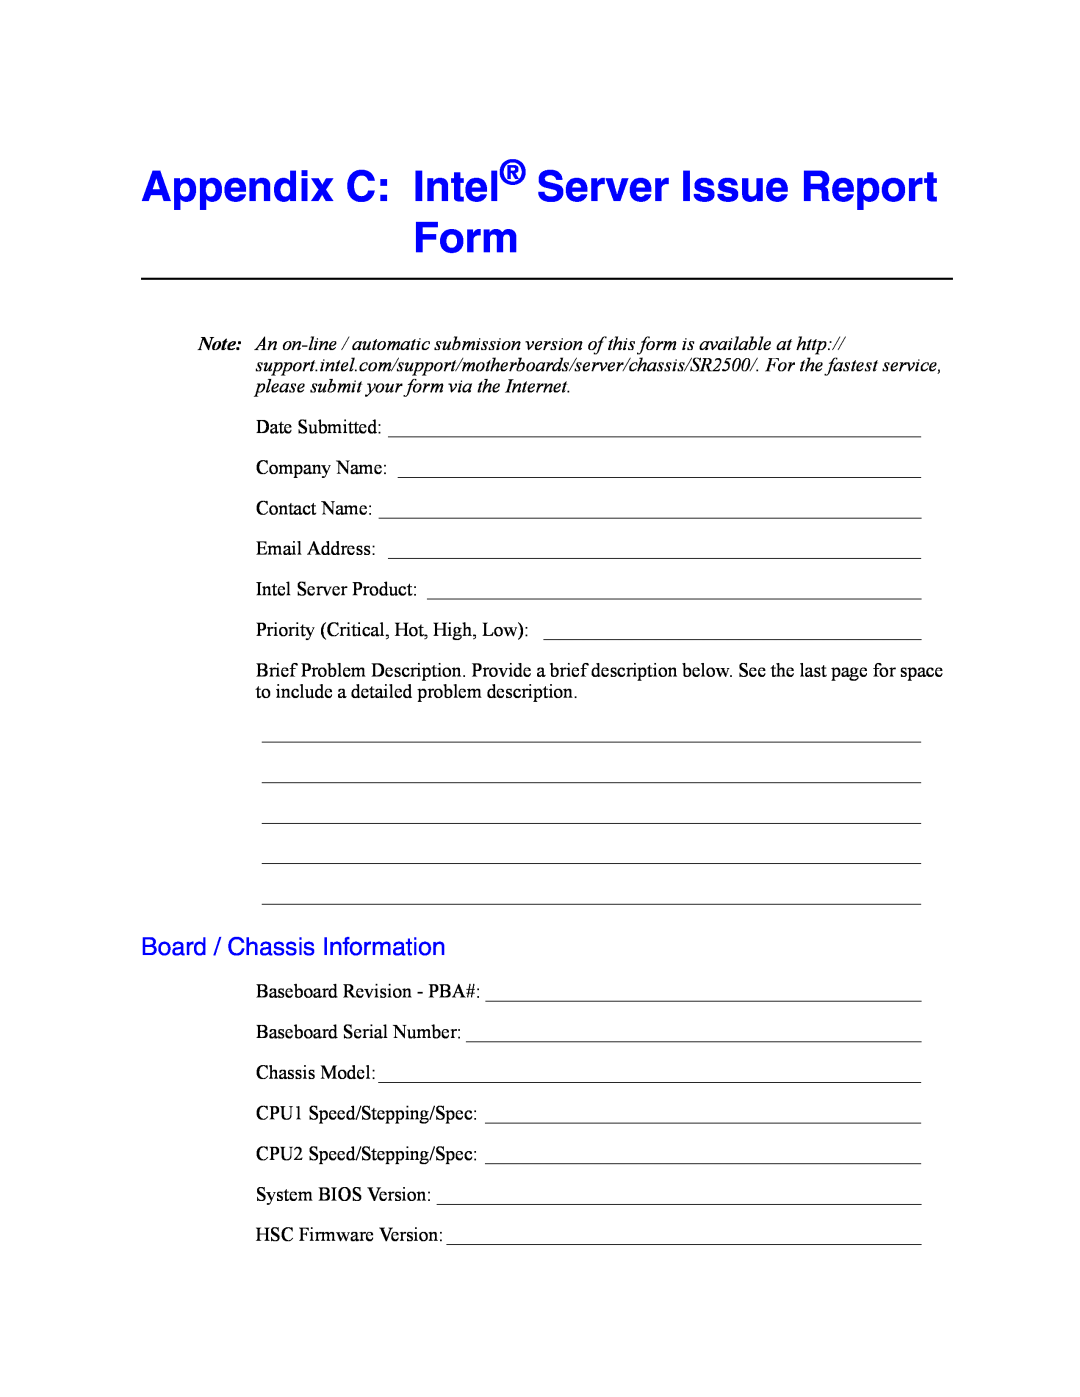 Intel SR2500AL manual Appendix C Intel Server Issue Report Form, Board / Chassis Information 